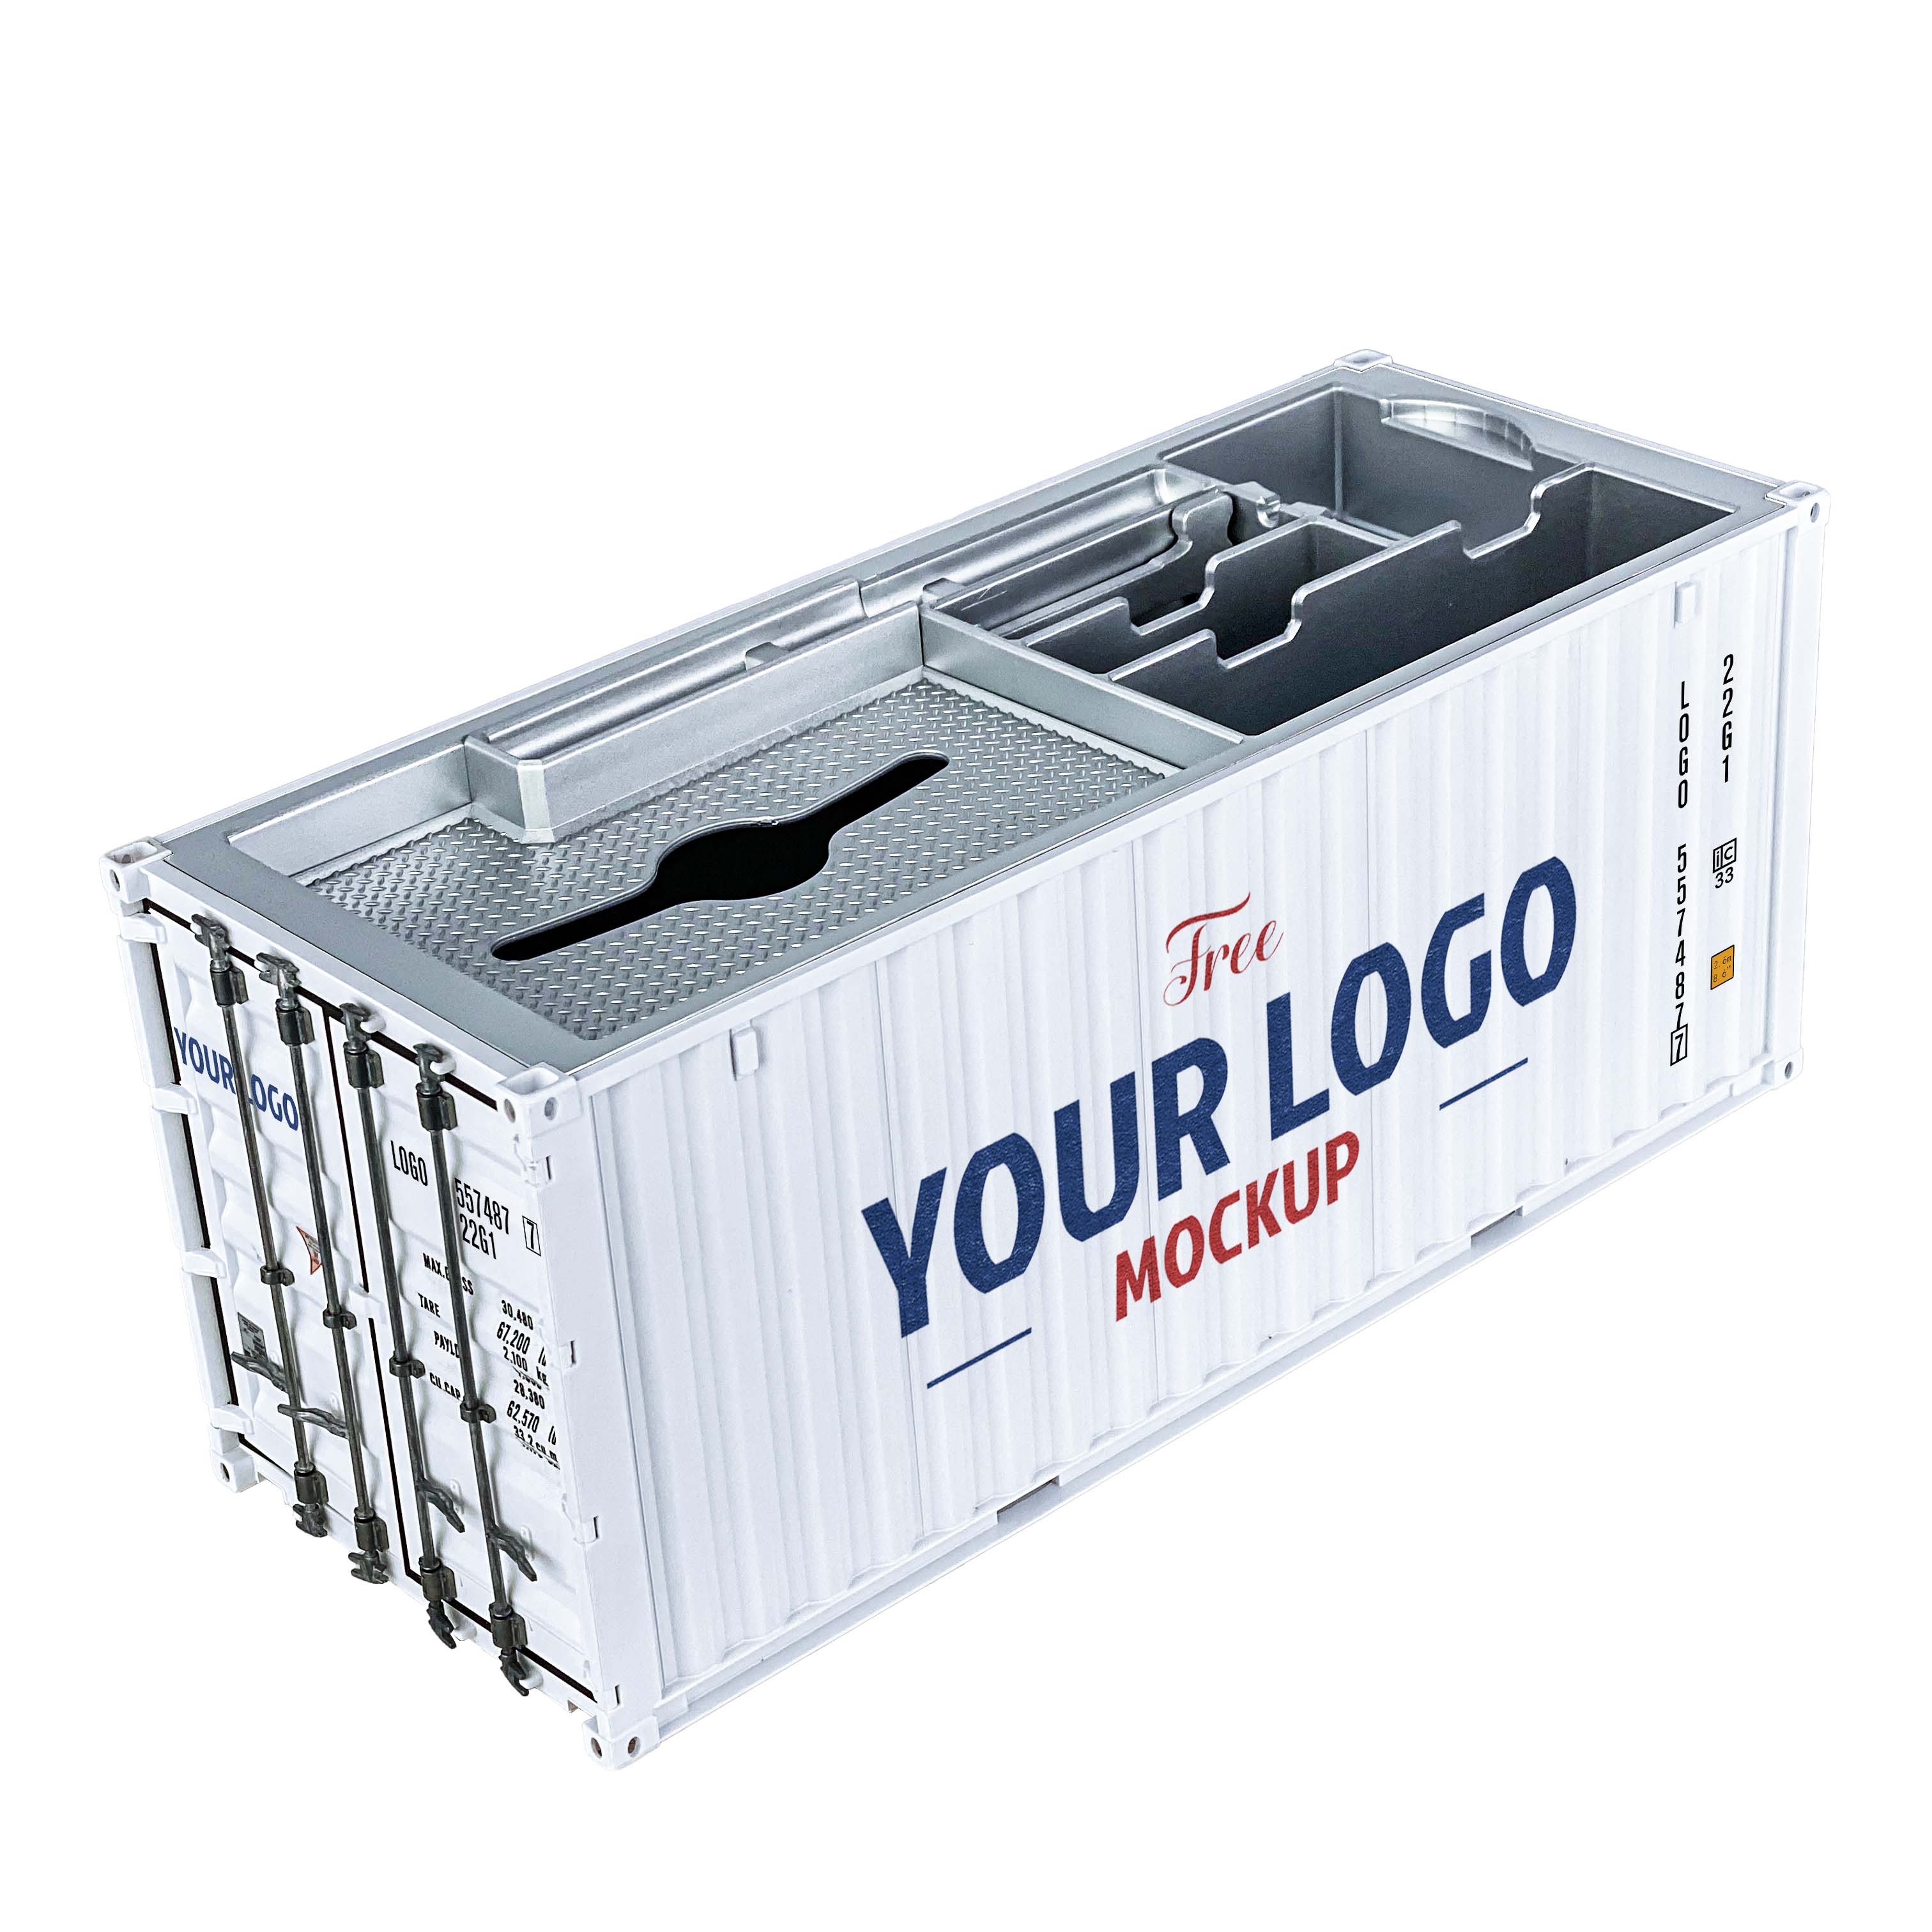 Shipping Container Organizer&Tissue Box 1:20